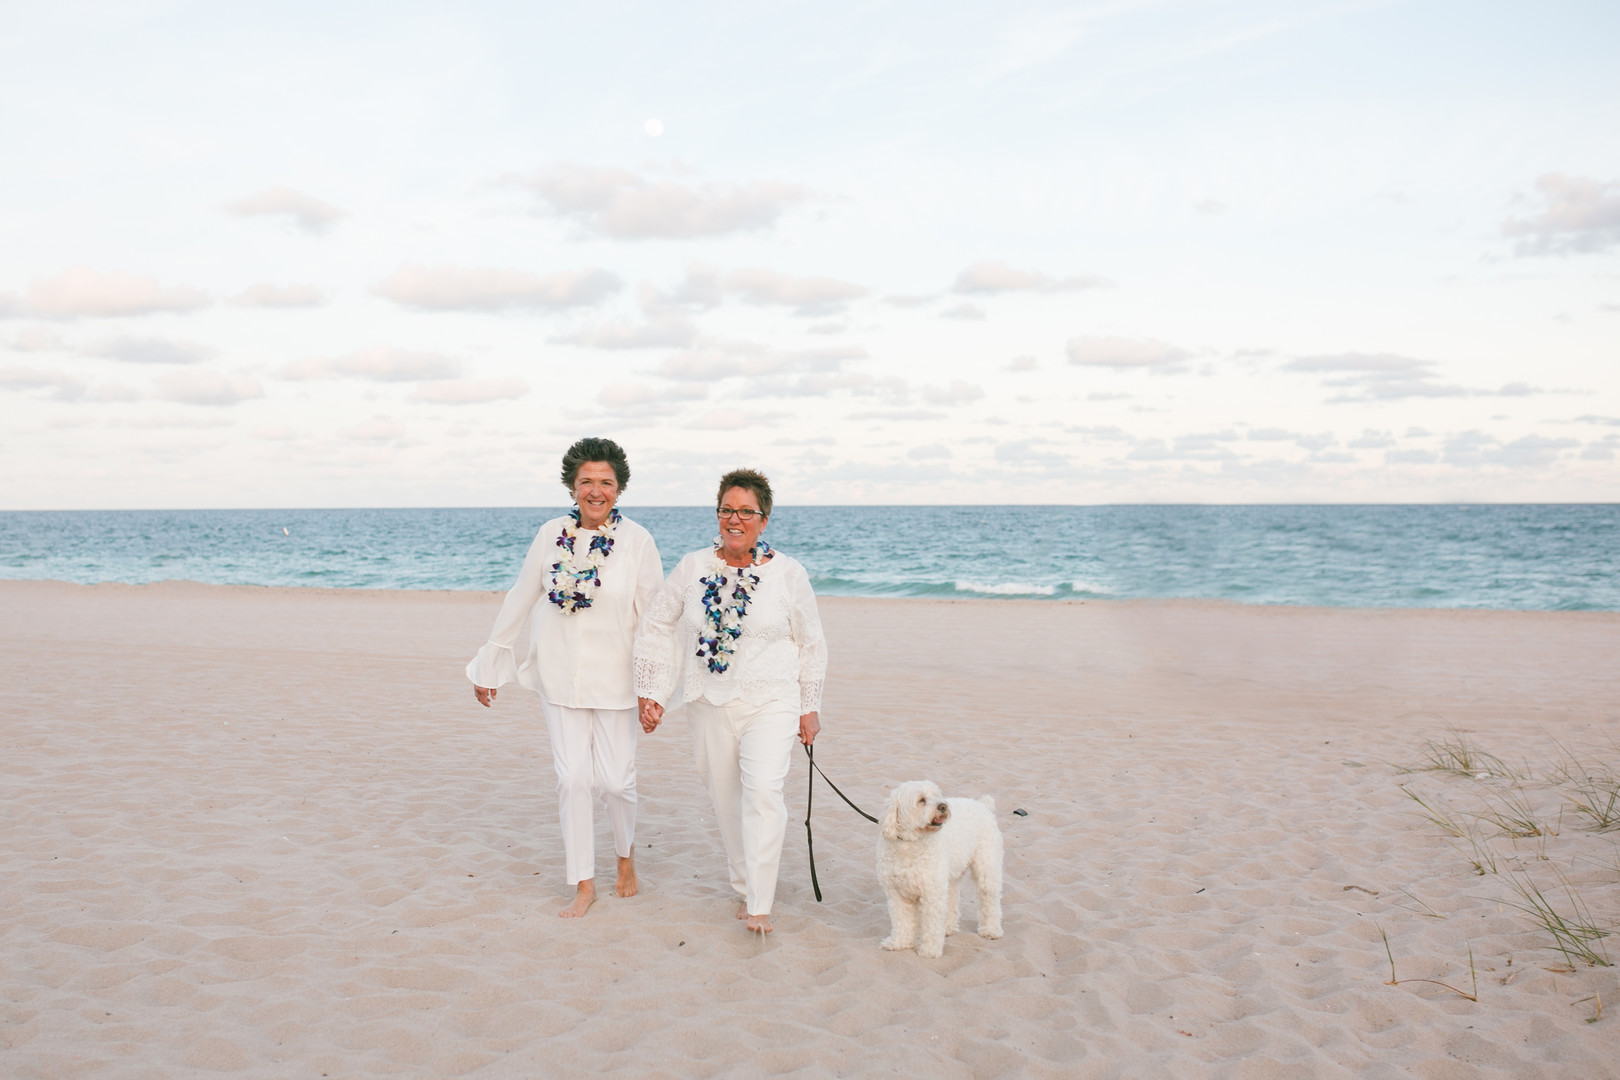 Romantic beach wedding in Fort Lauderdale, Florida two brides lesbian wedding dog